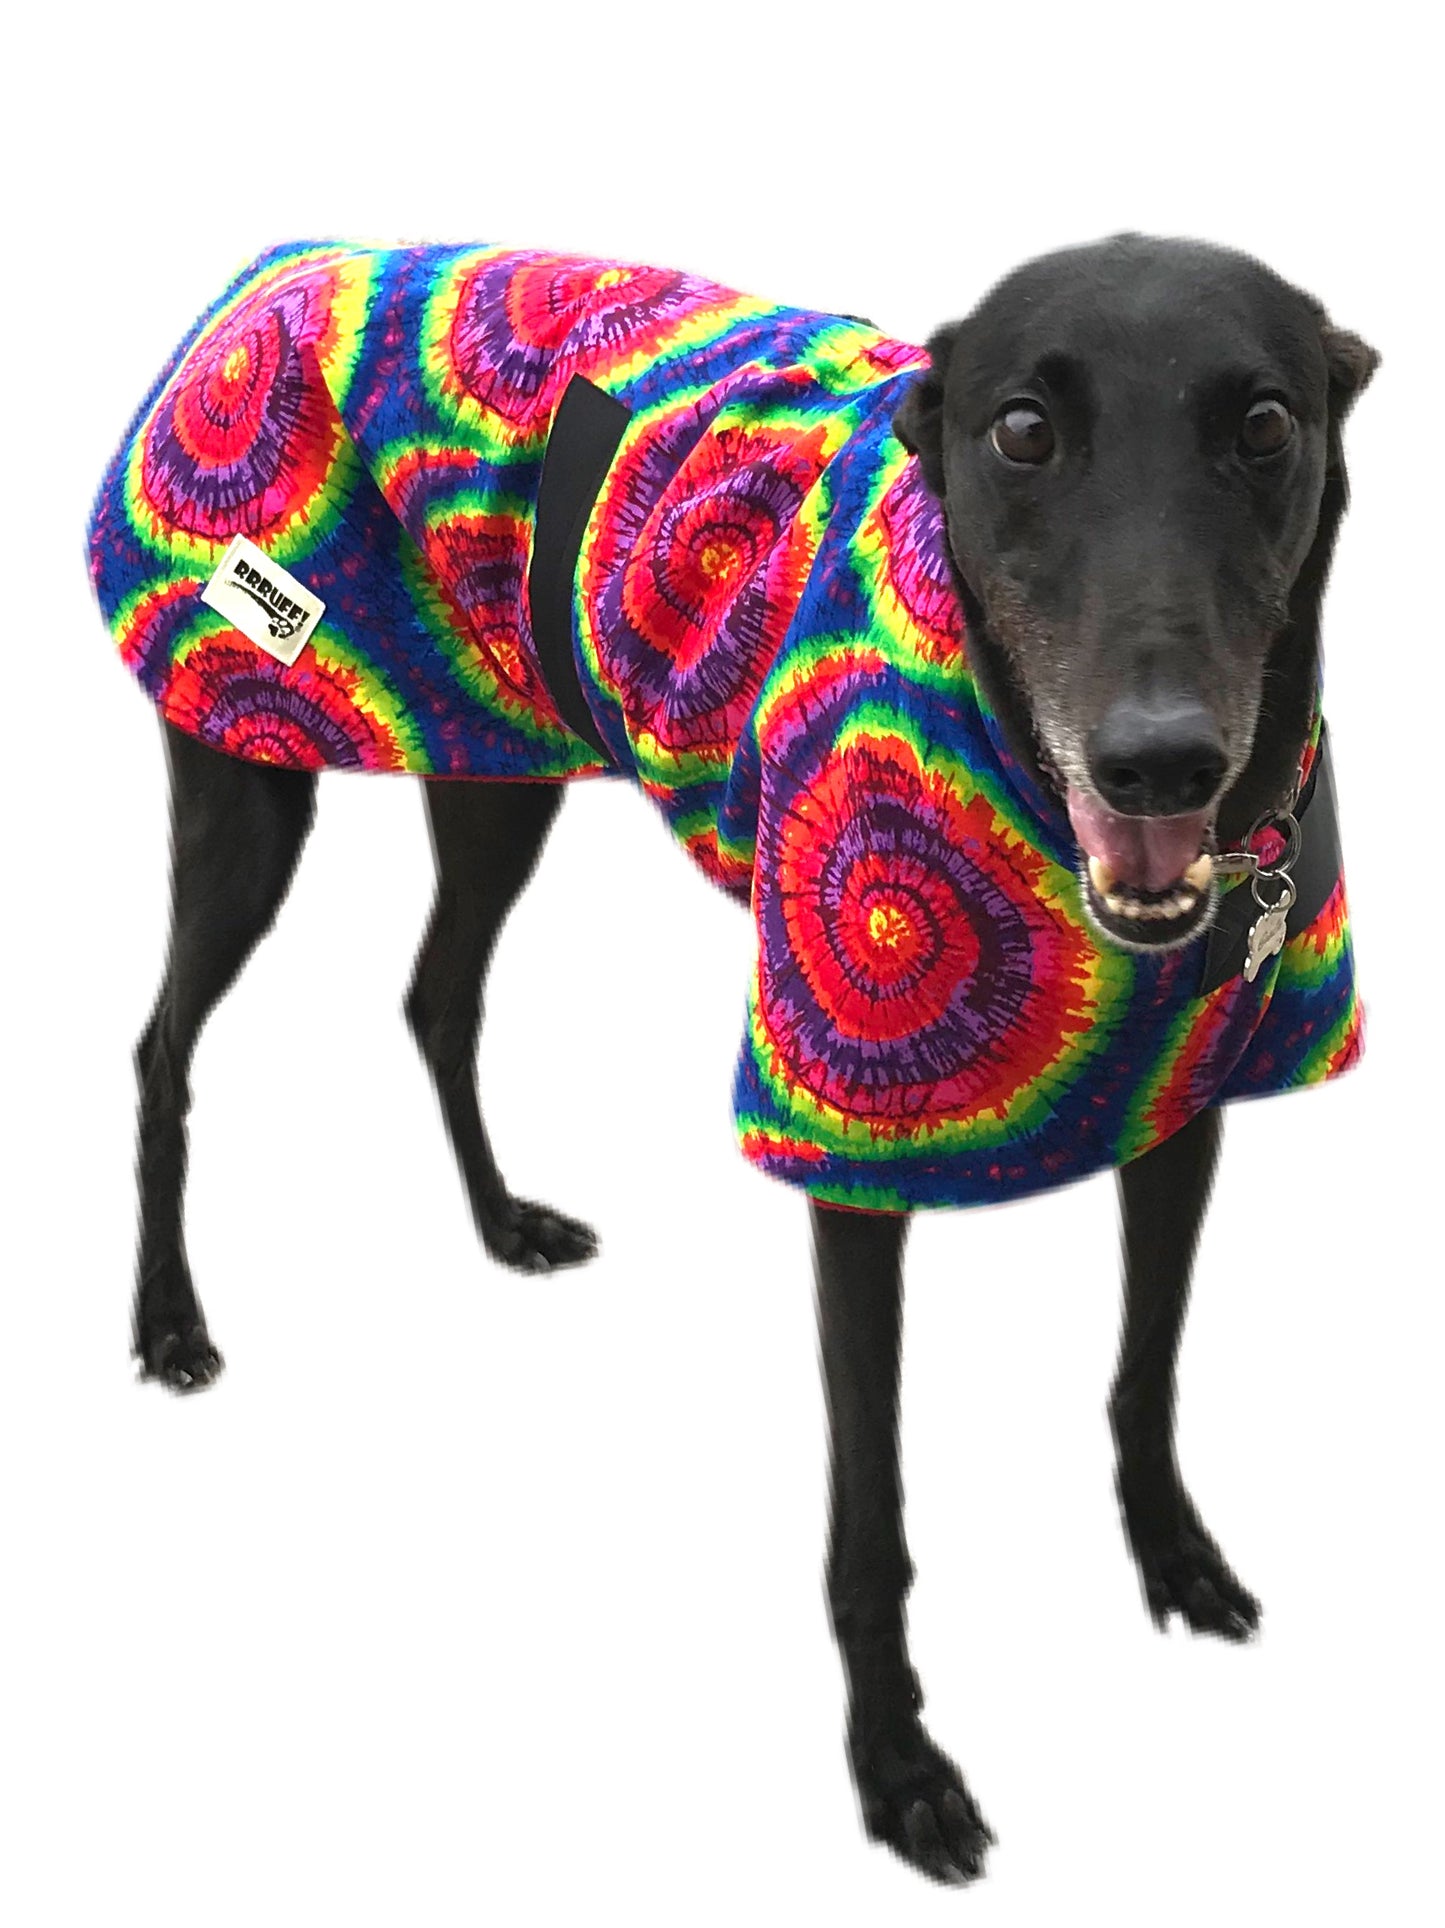 Vivid Greyhound ‘retro’ autumn coat in cotton & plush fleece washable